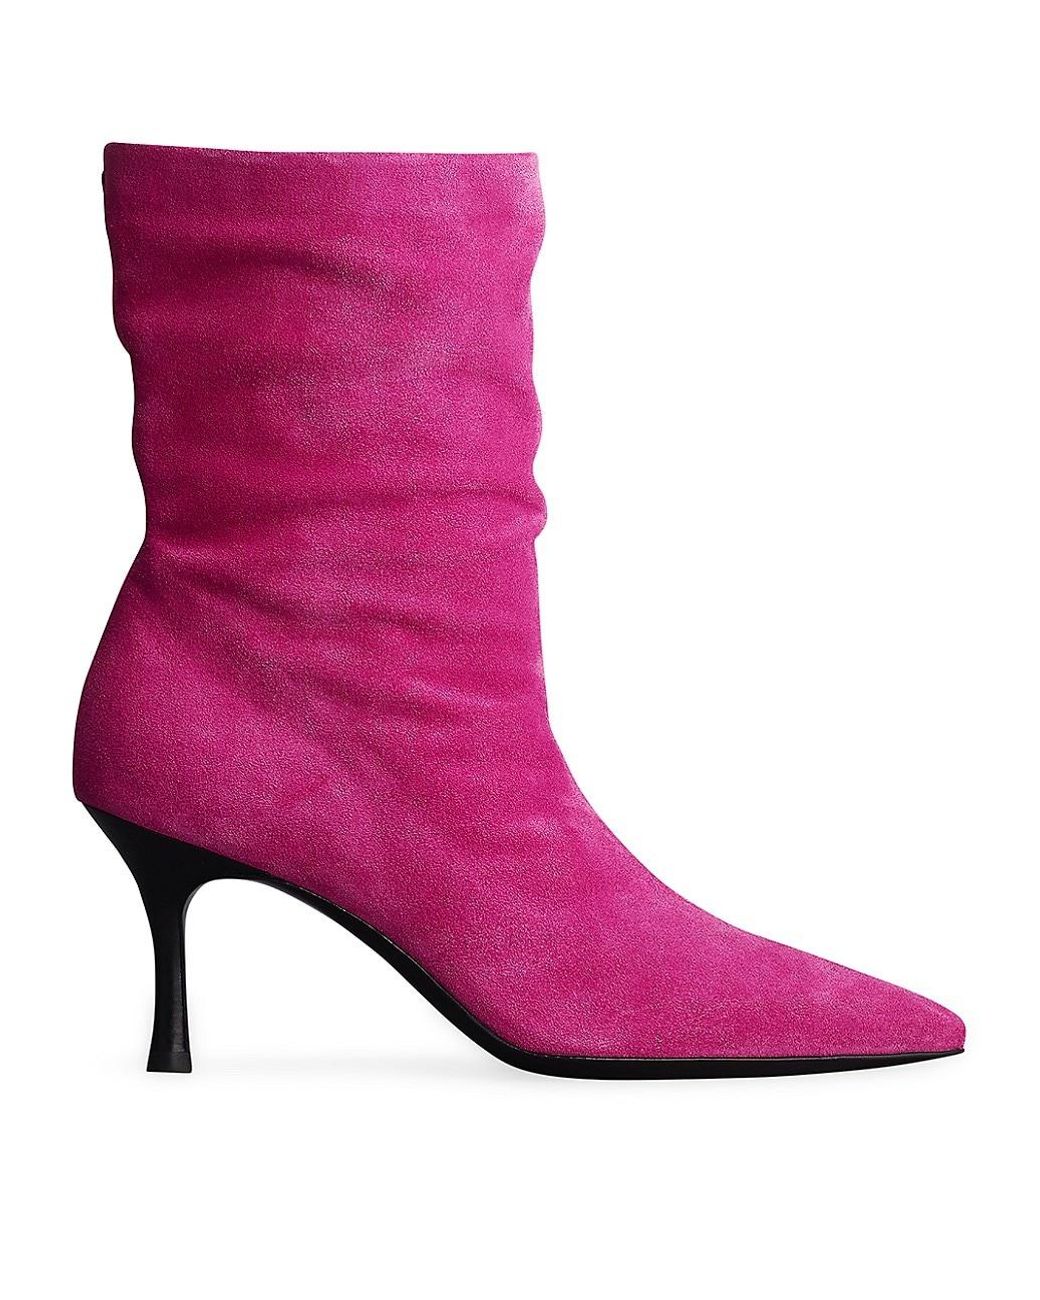 Rag & Bone Brea 75mm Suede Slouch Boots in Pink | Lyst